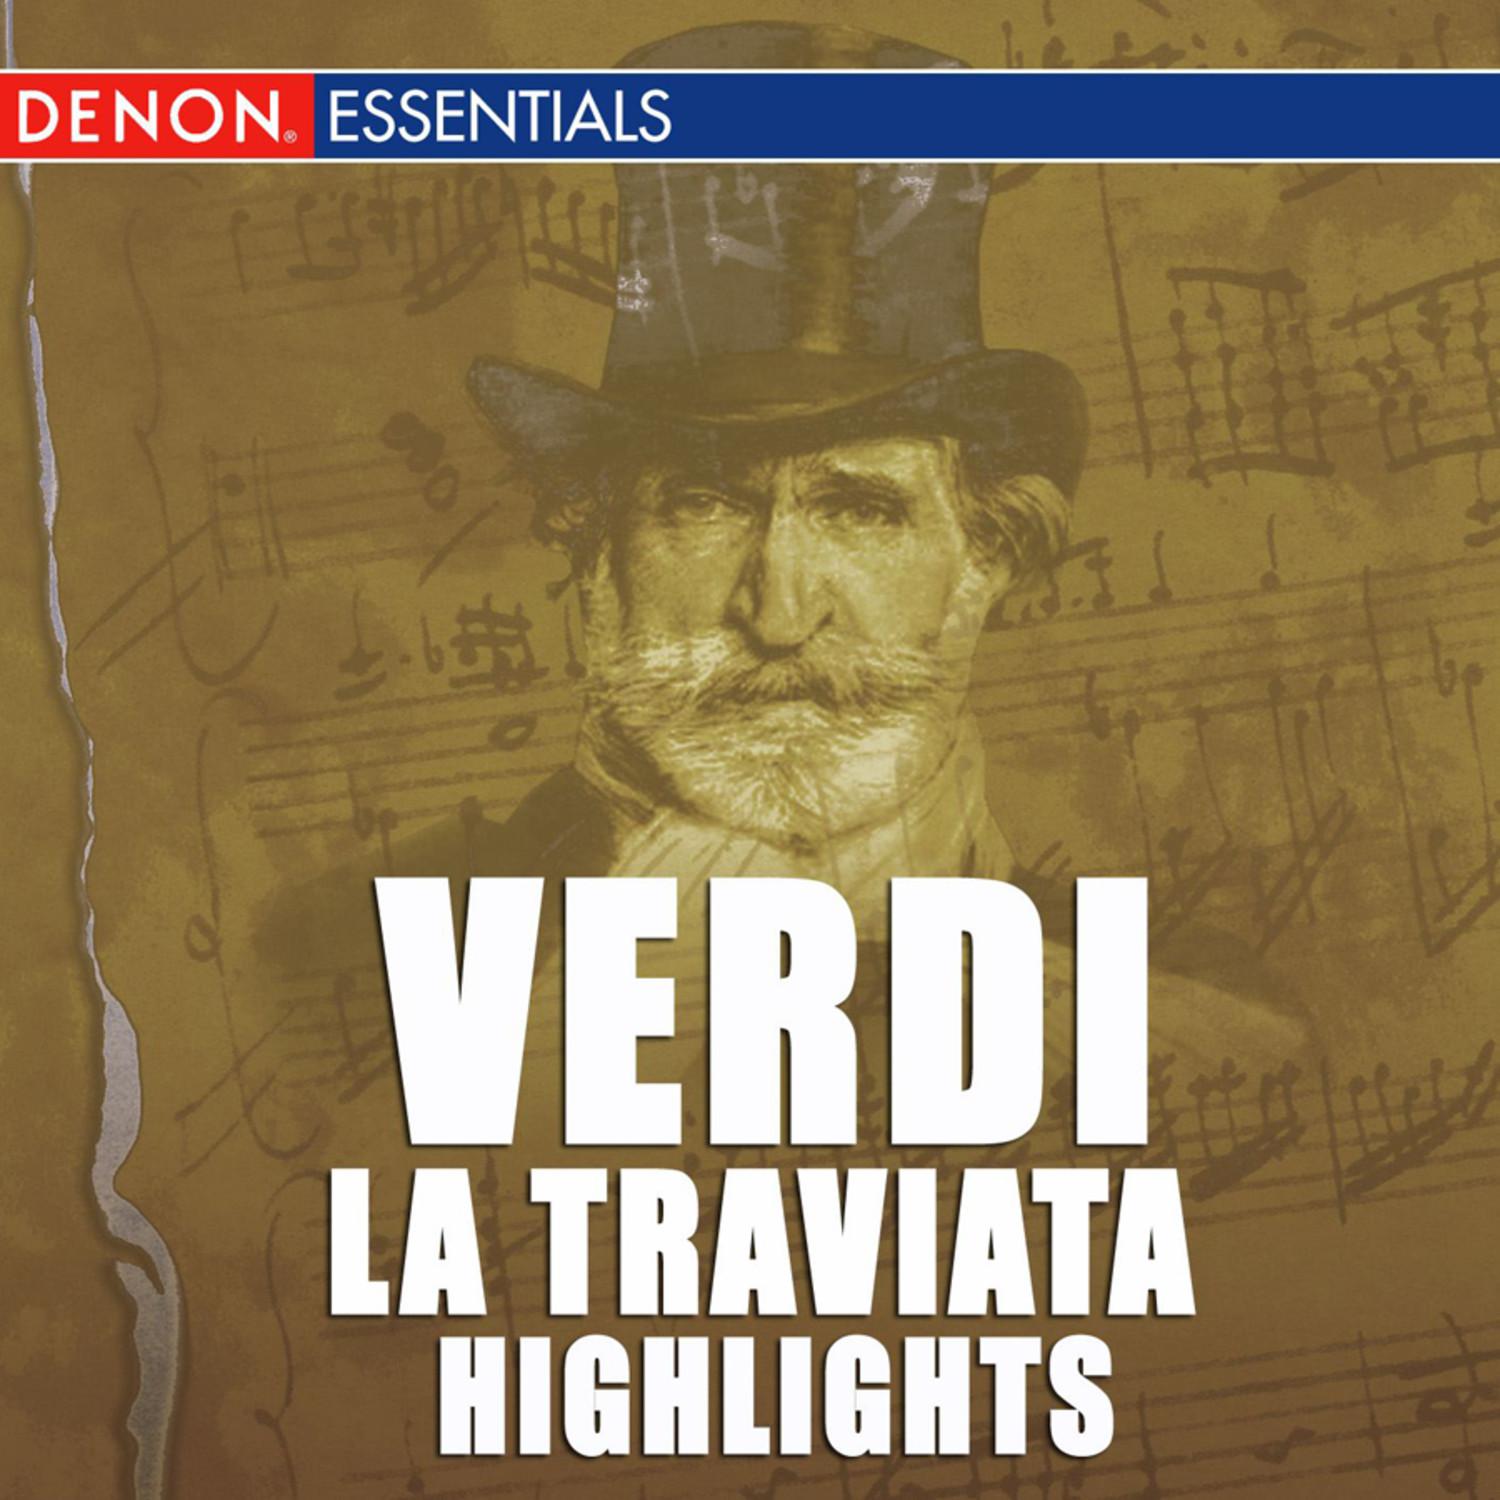 La Traviata, Act III: "Ah! Violetta"